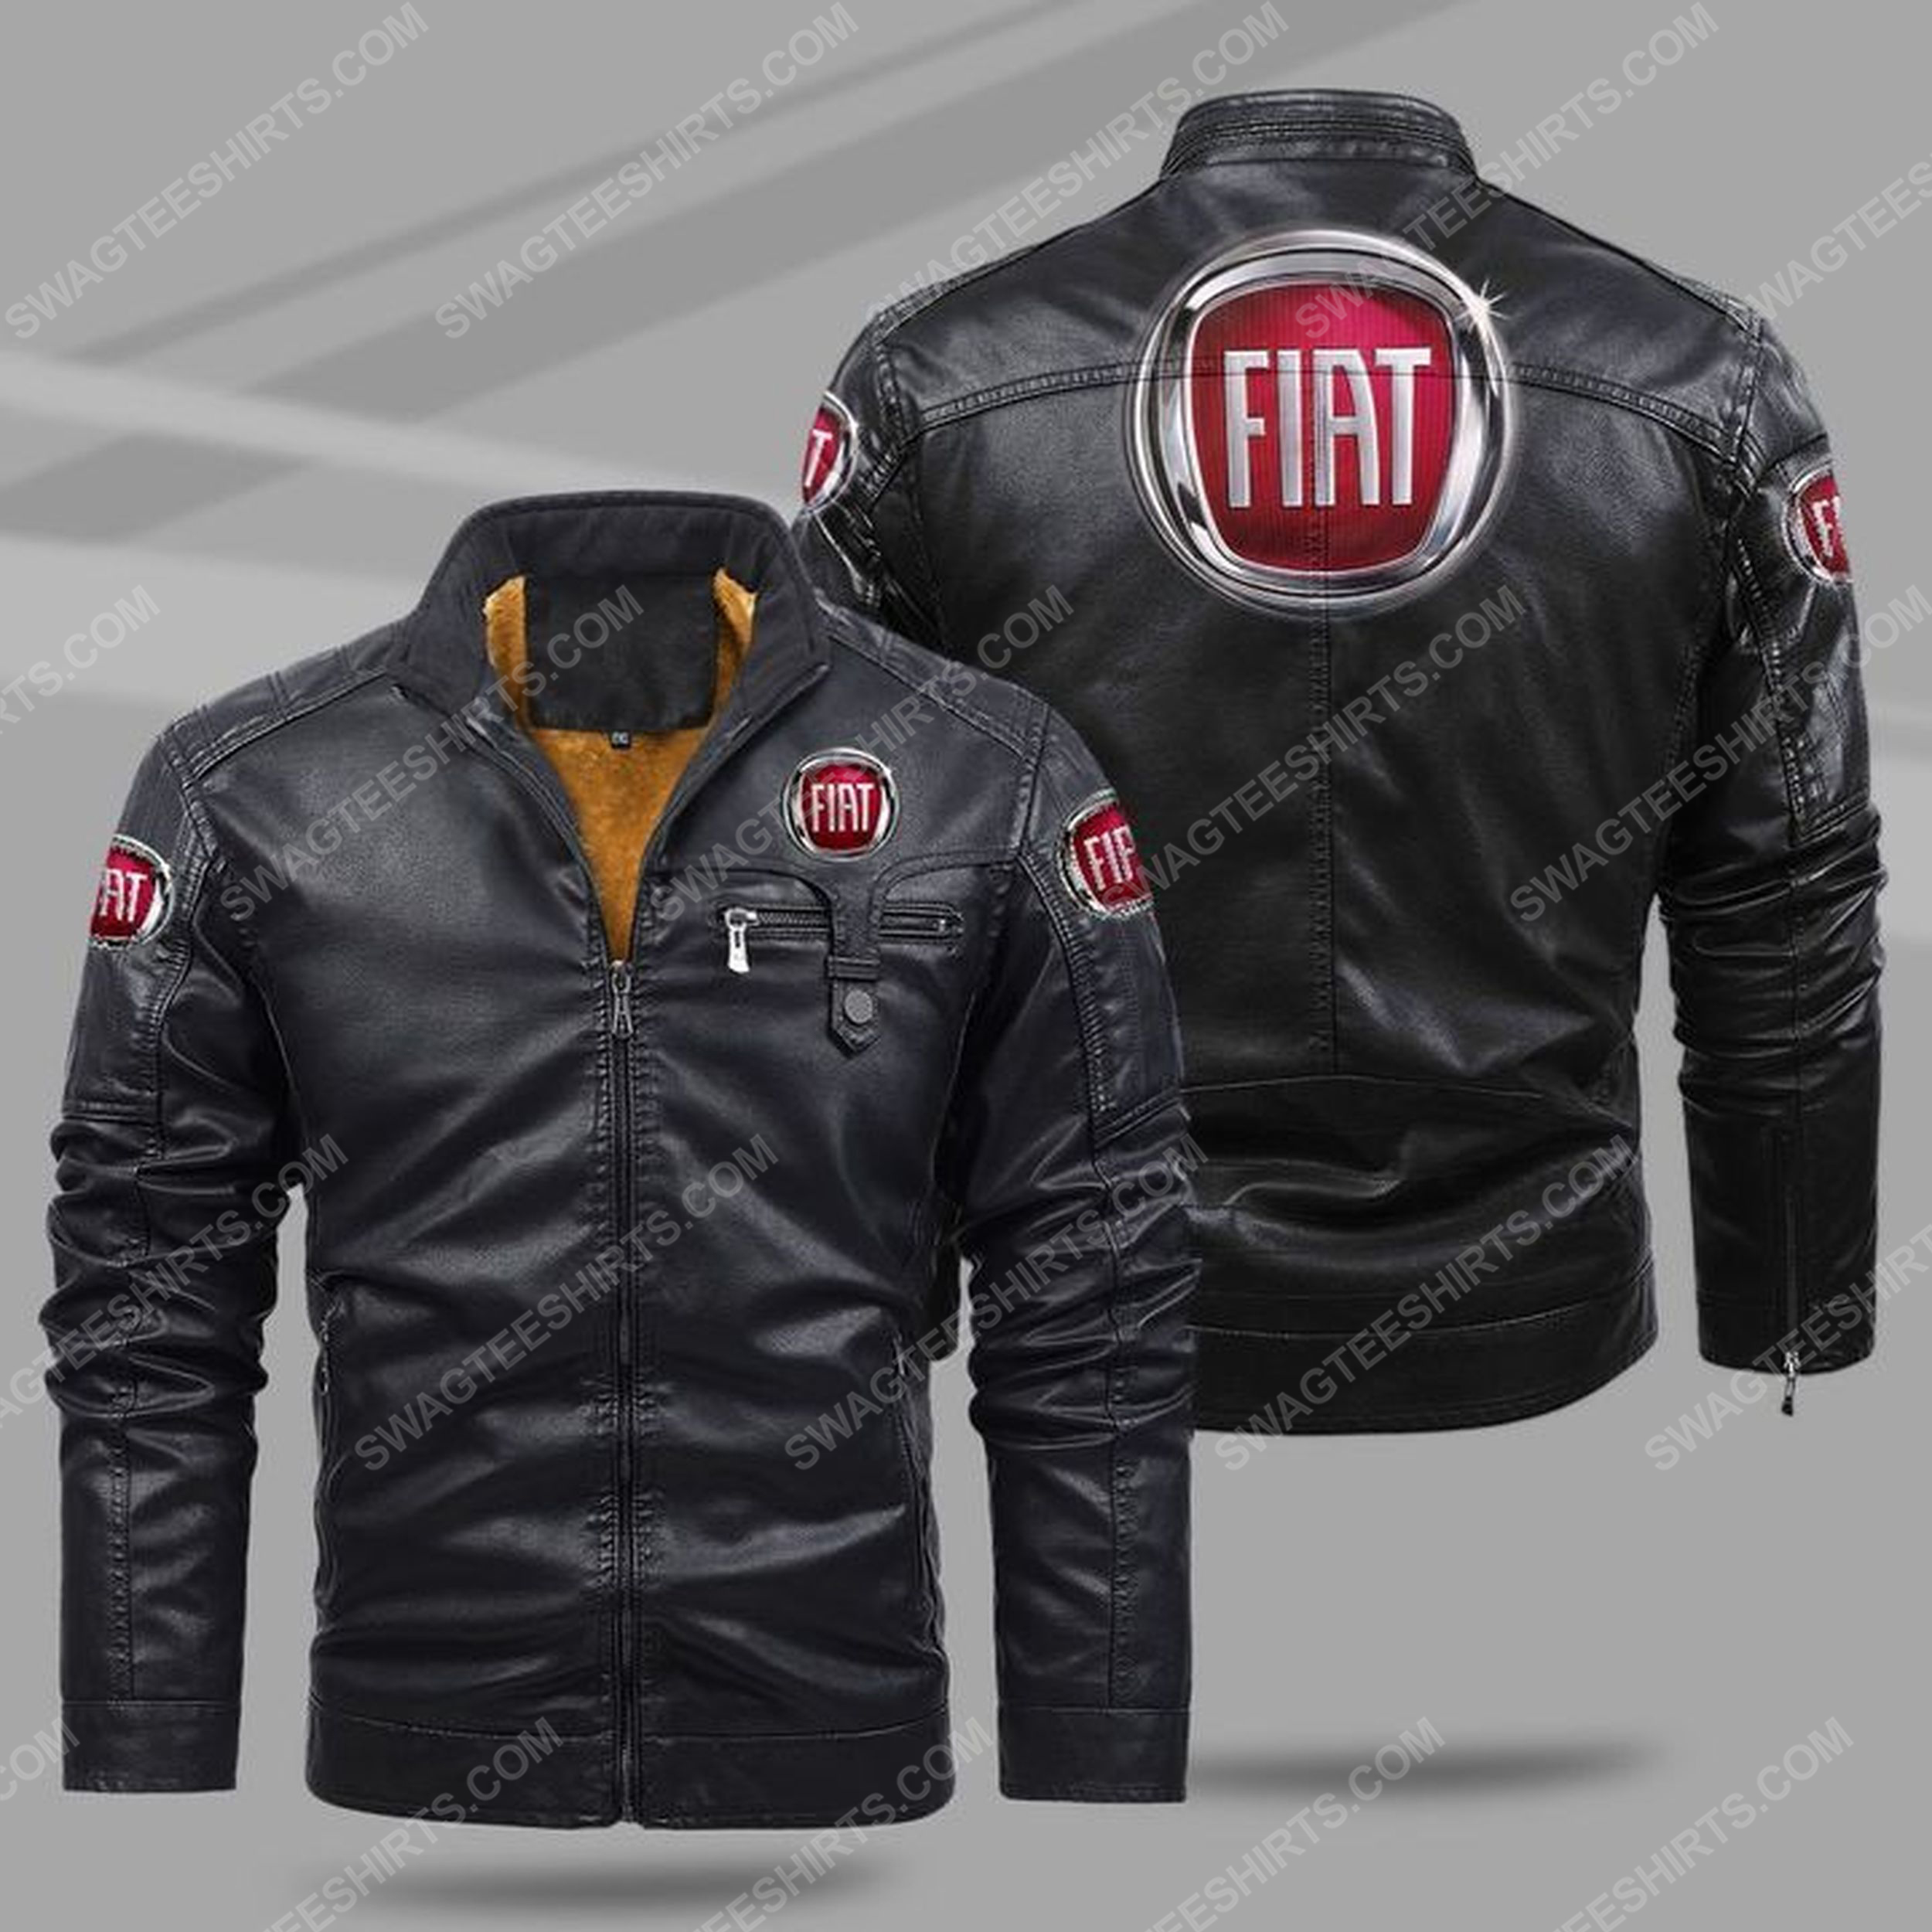 The fiat car all over print fleece leather jacket - black 1 - Copy